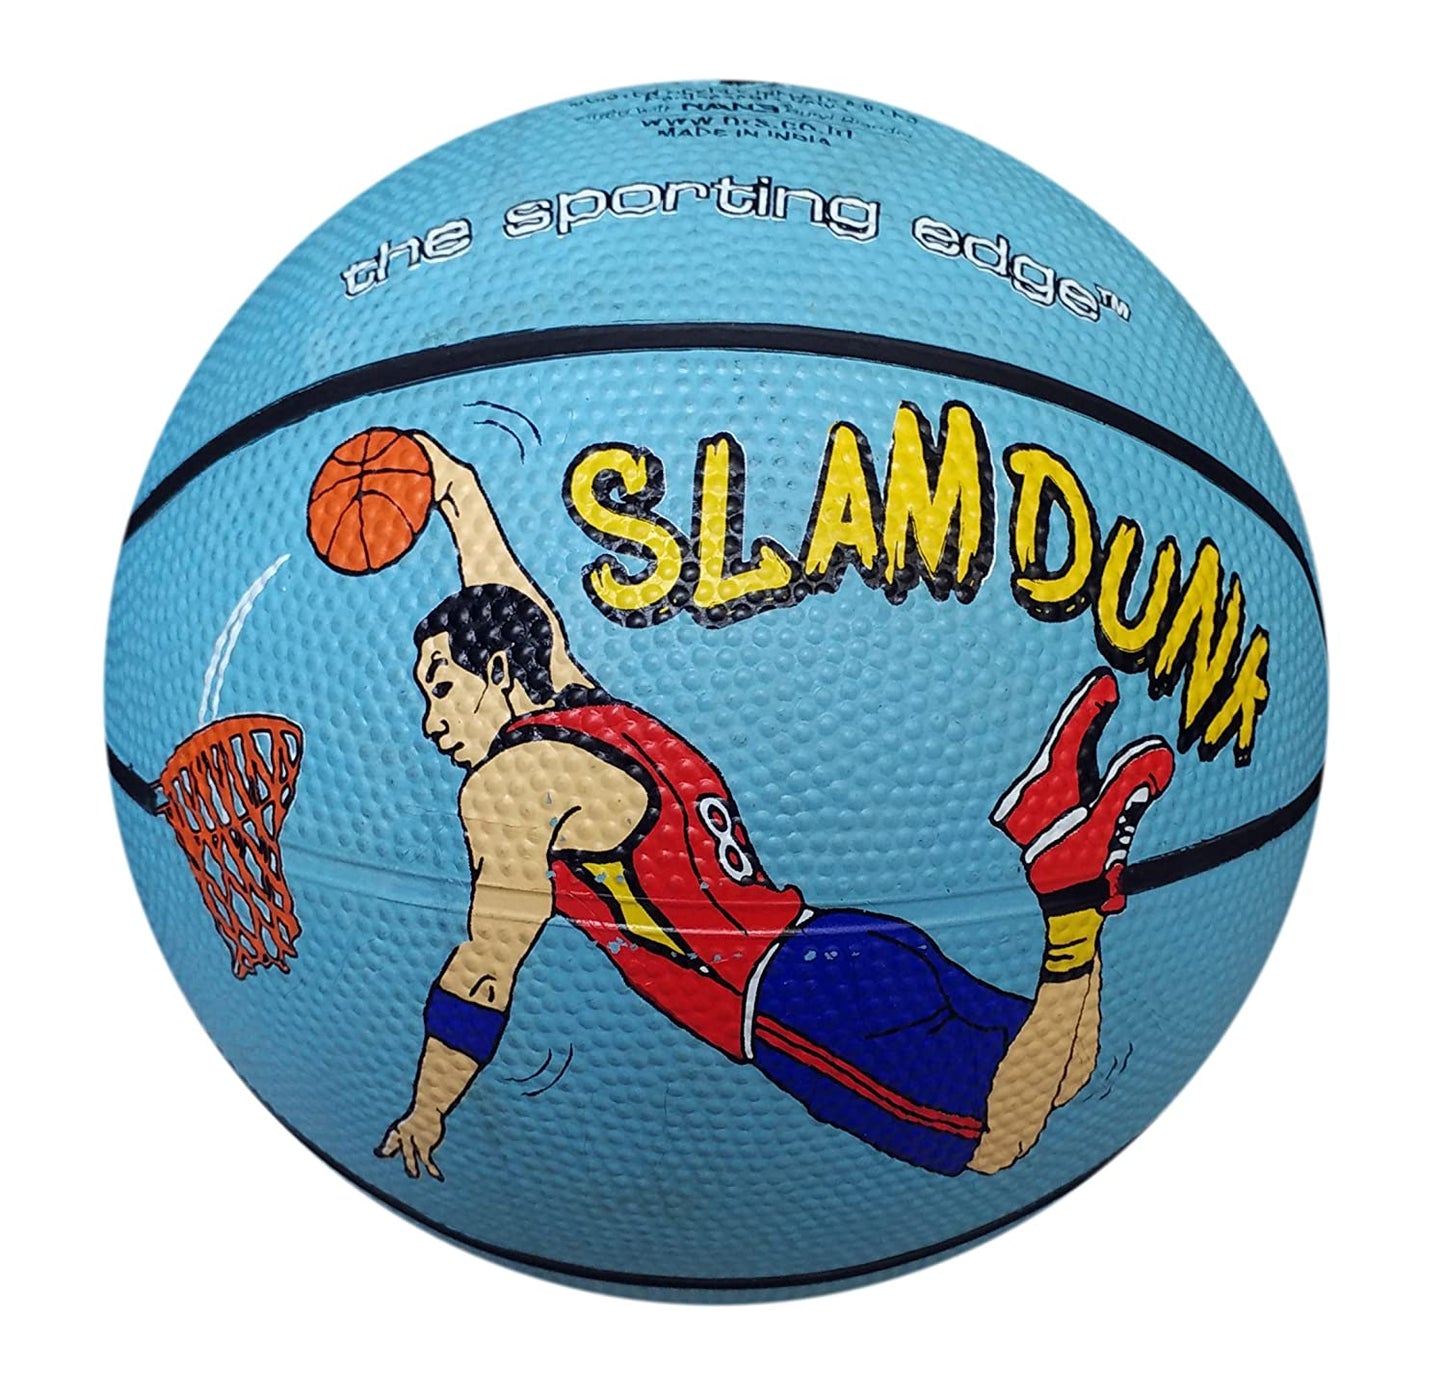 HRS Little Champ Basketball - Size 3 (Assorted Color) - Best Price online Prokicksports.com